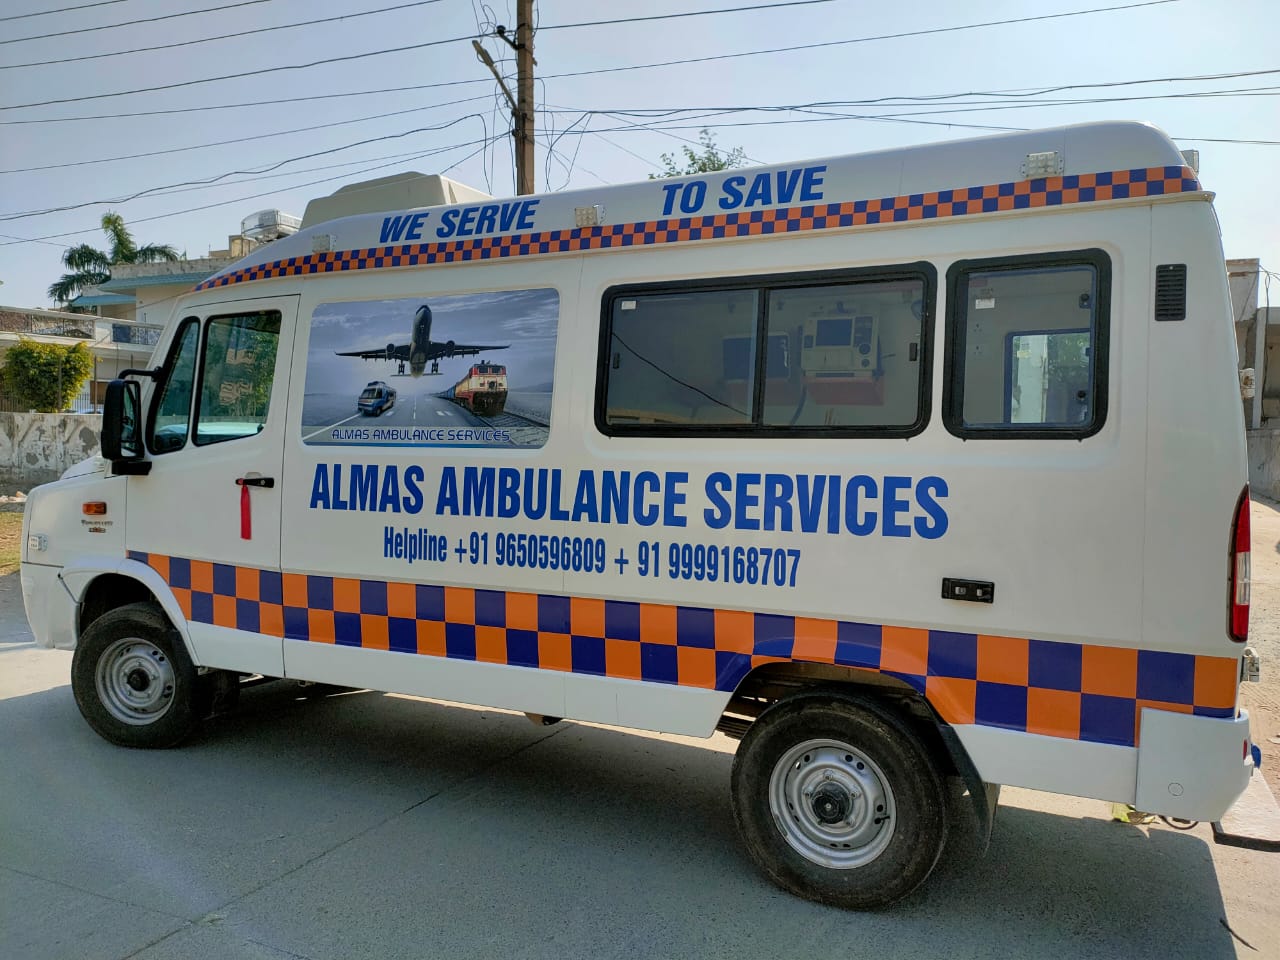 road ambulance services in delhi ncr - almas ambulance